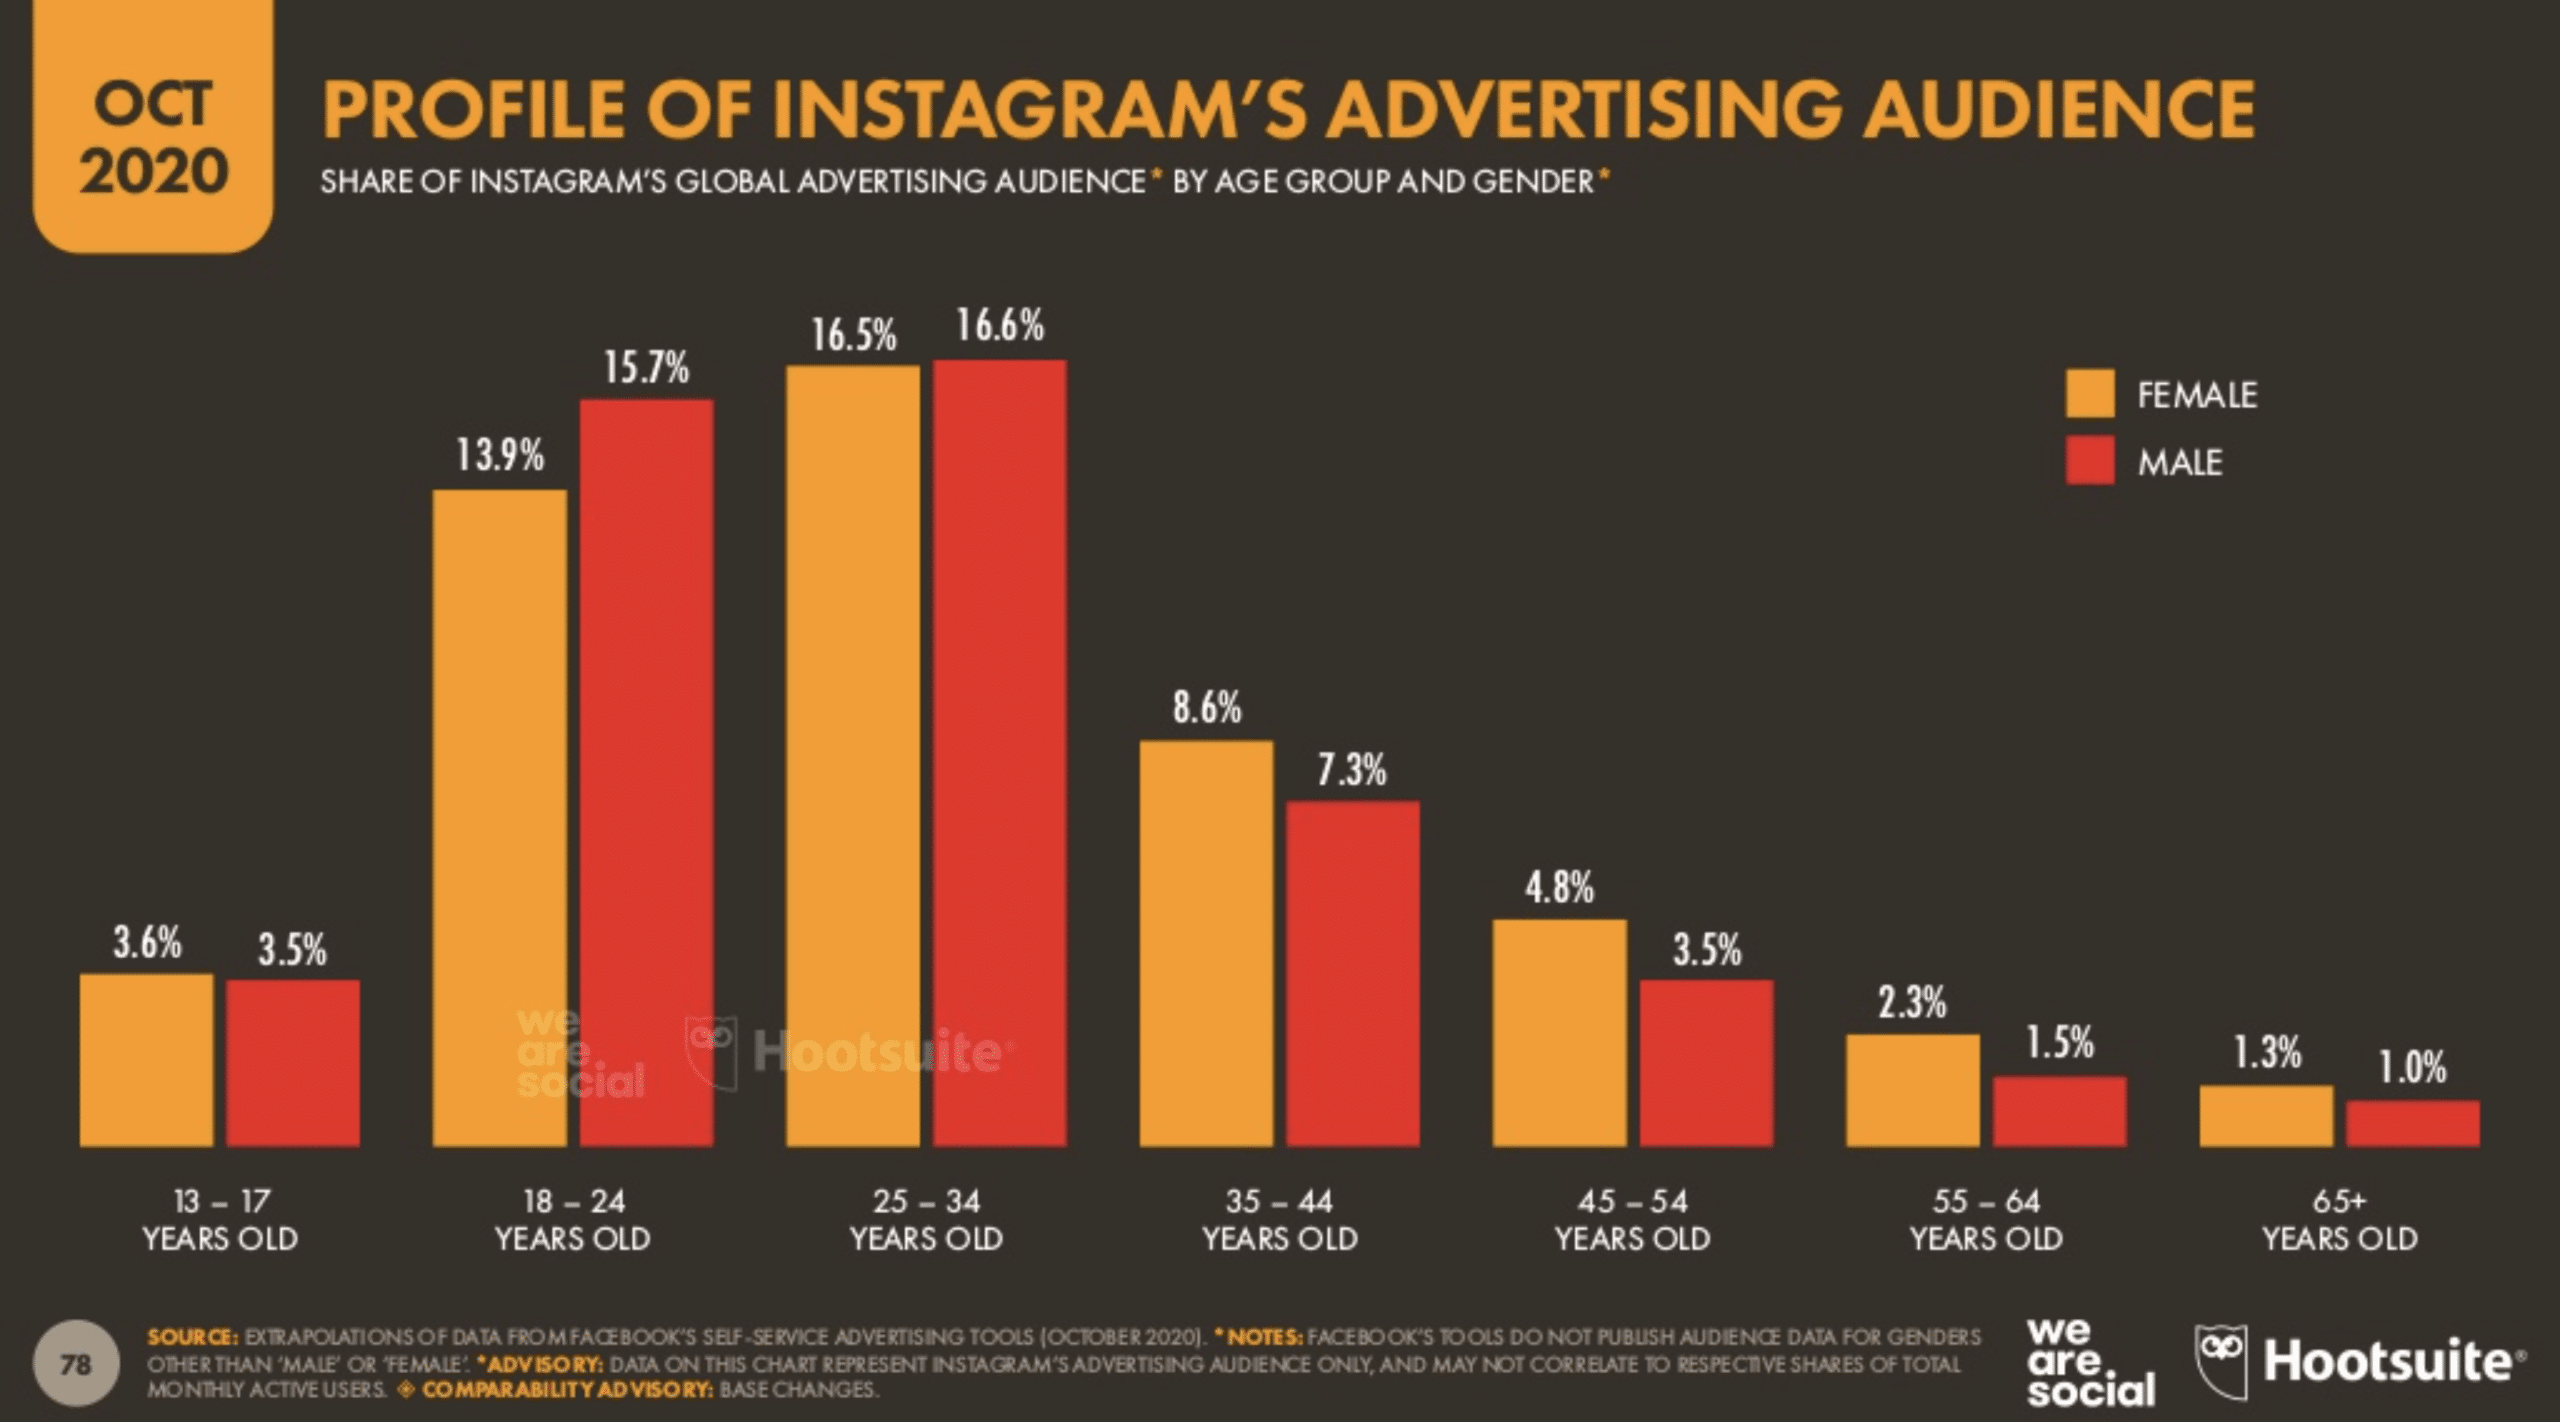 Profile of Instagram's advertising audience